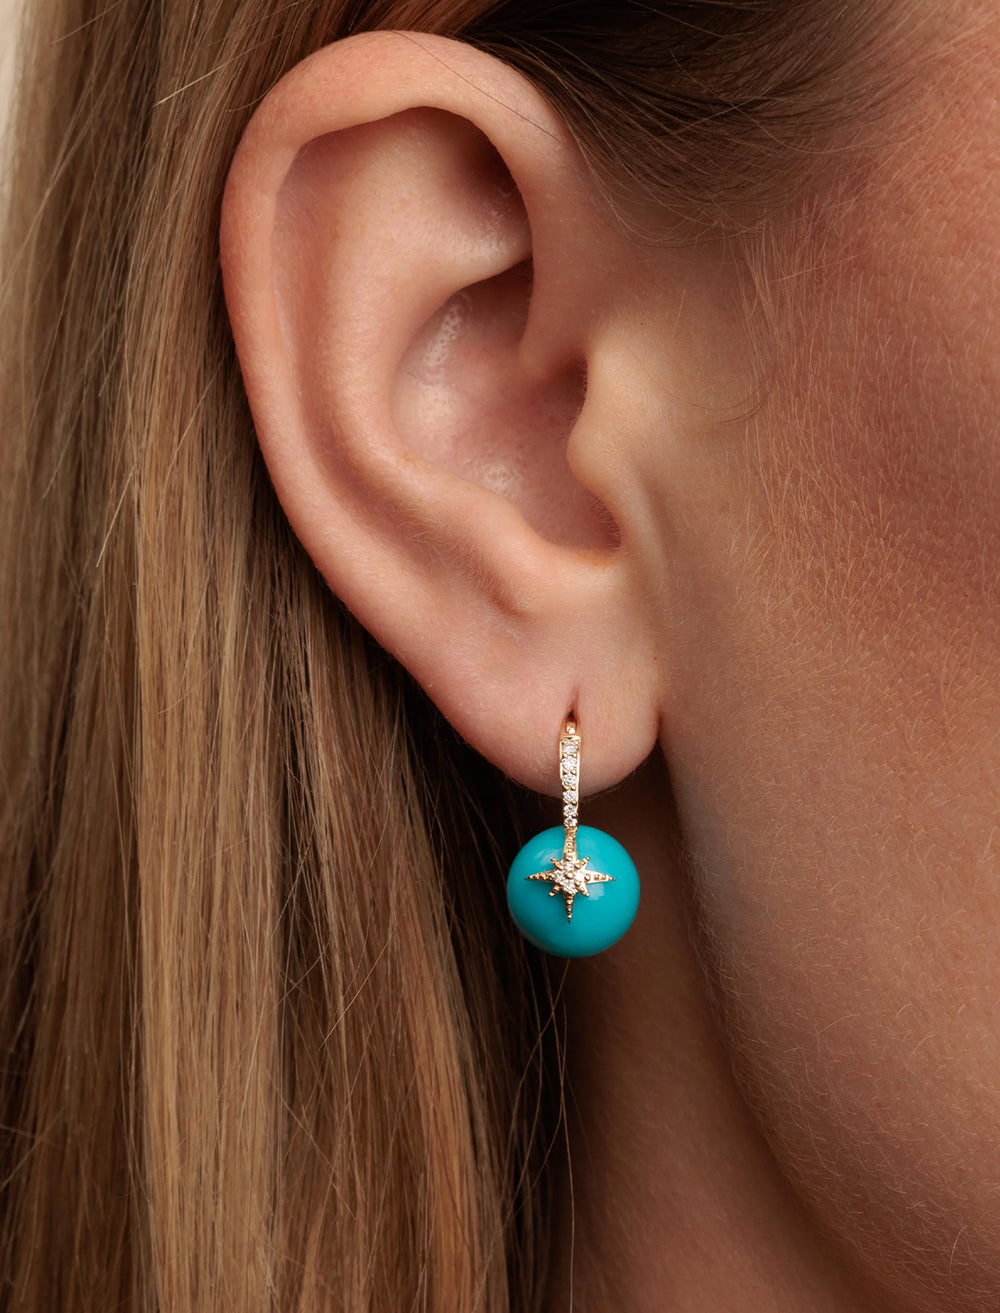 Model wearing Sydney Evan's turquoise pave starburst bead earrings.